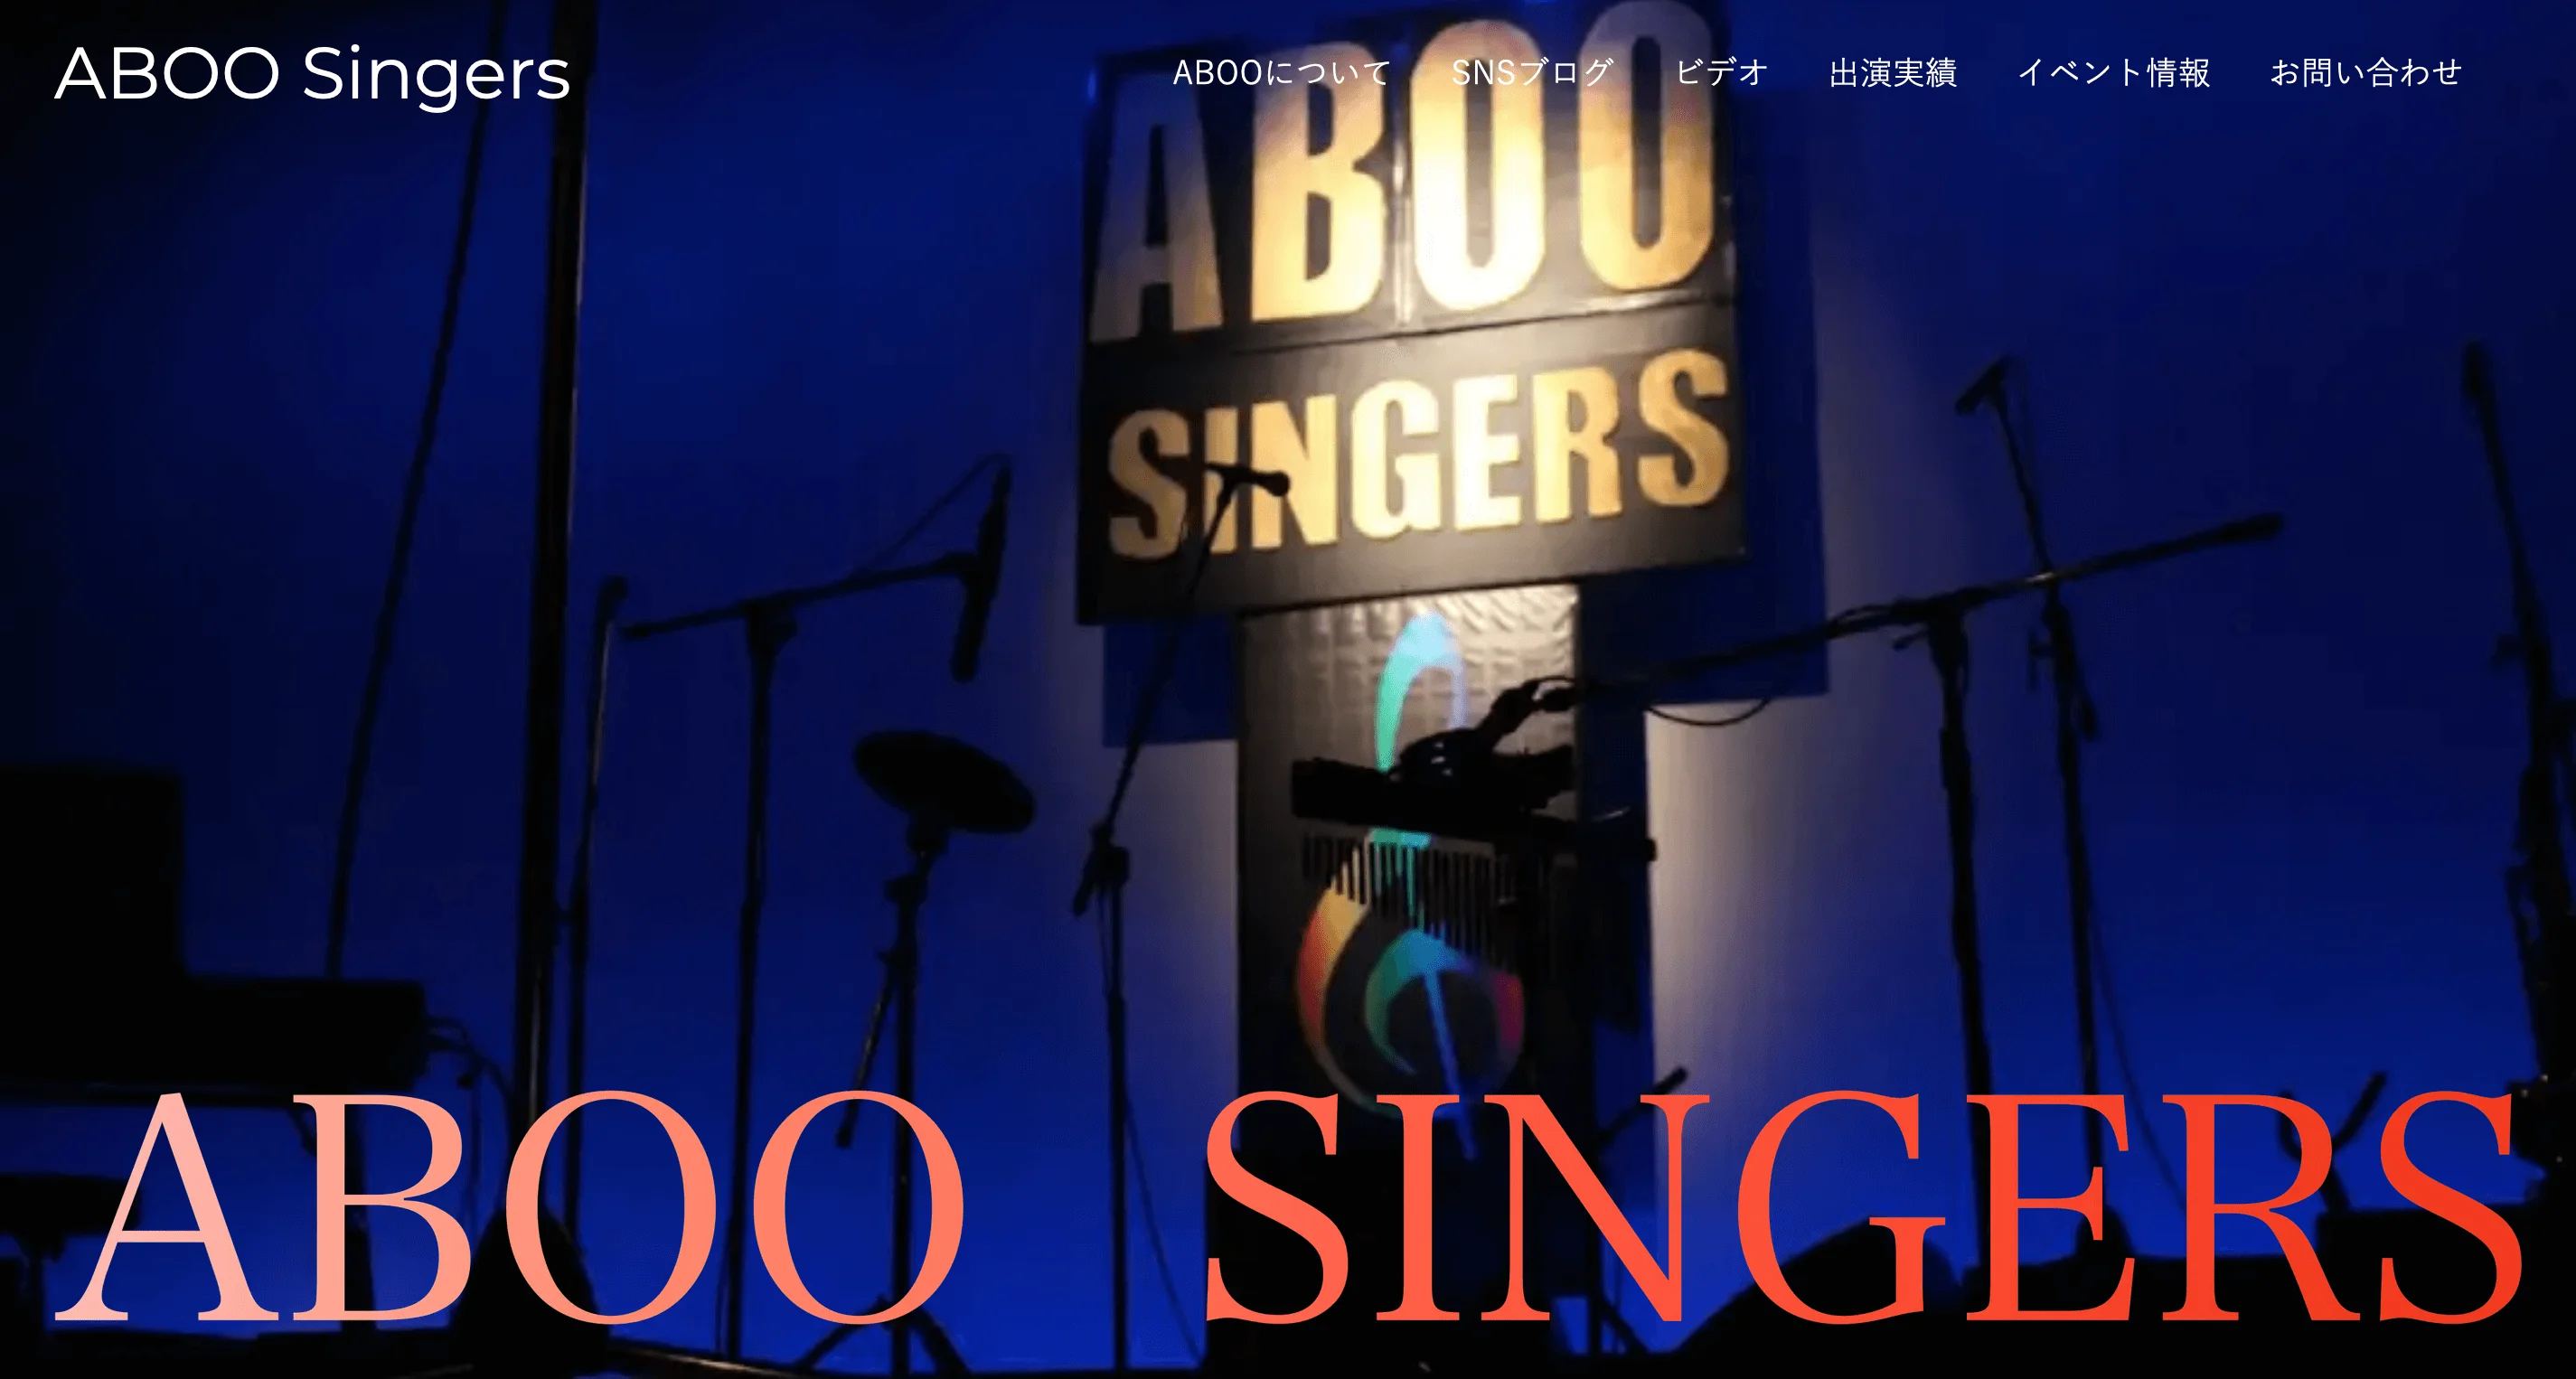 ABOO Singers Website